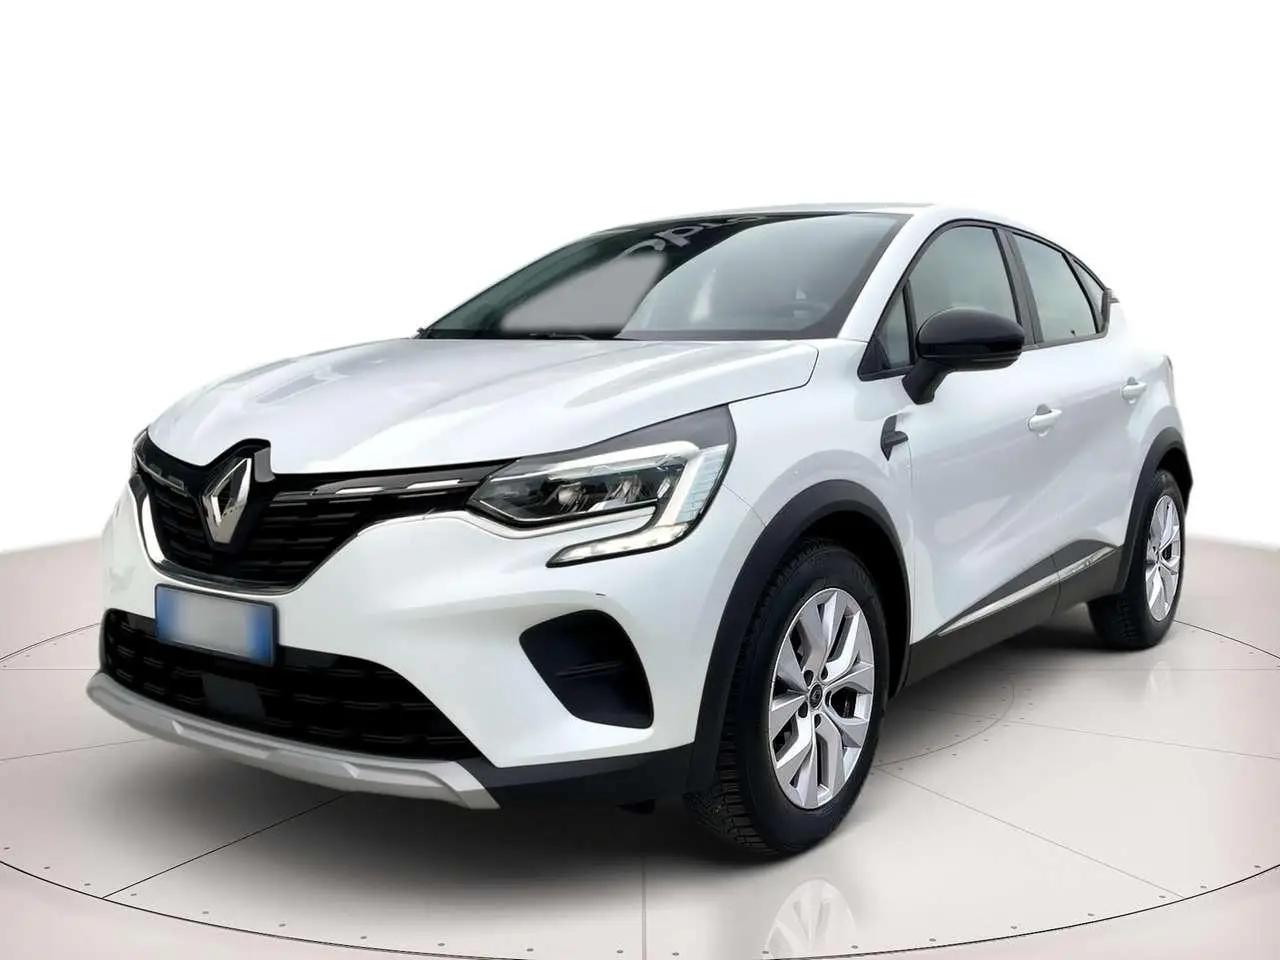 Photo 1 : Renault Captur 2020 LPG